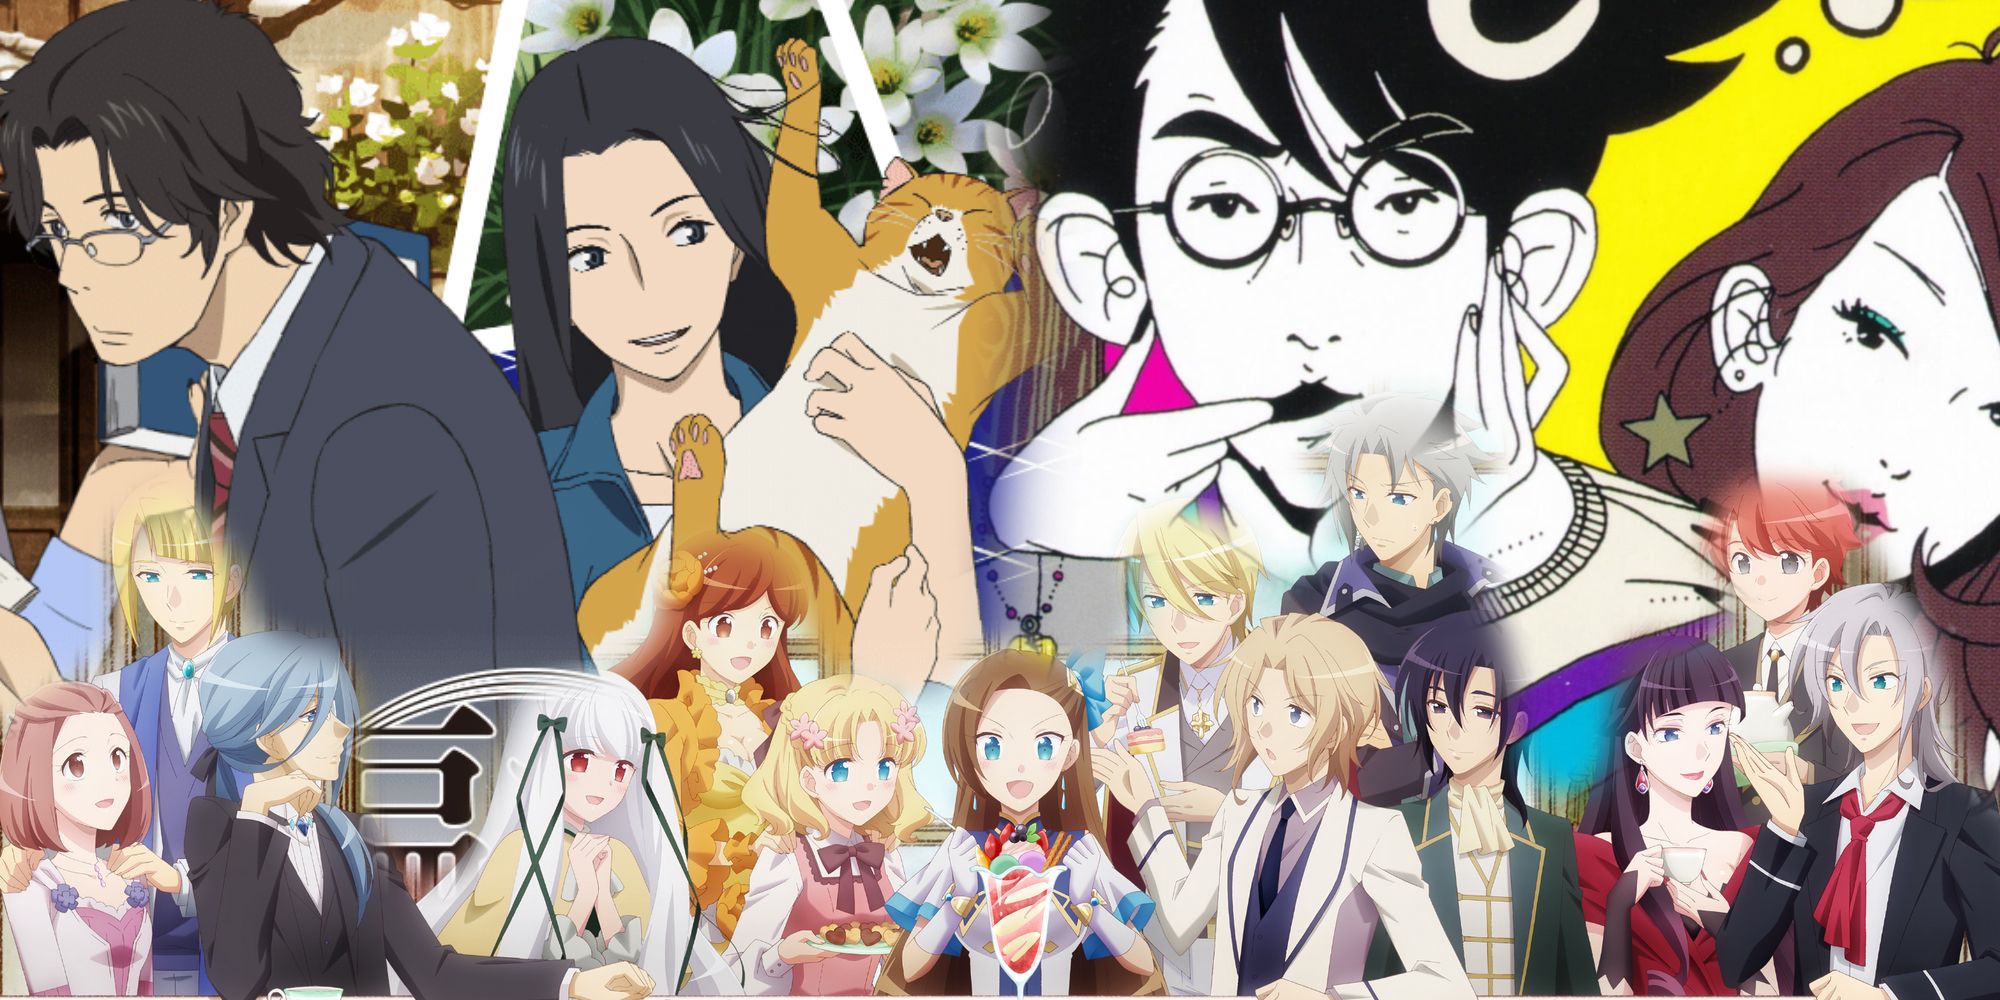 Seirei Gensouki: Spirit Chronicles' The TV anime will be broadcast